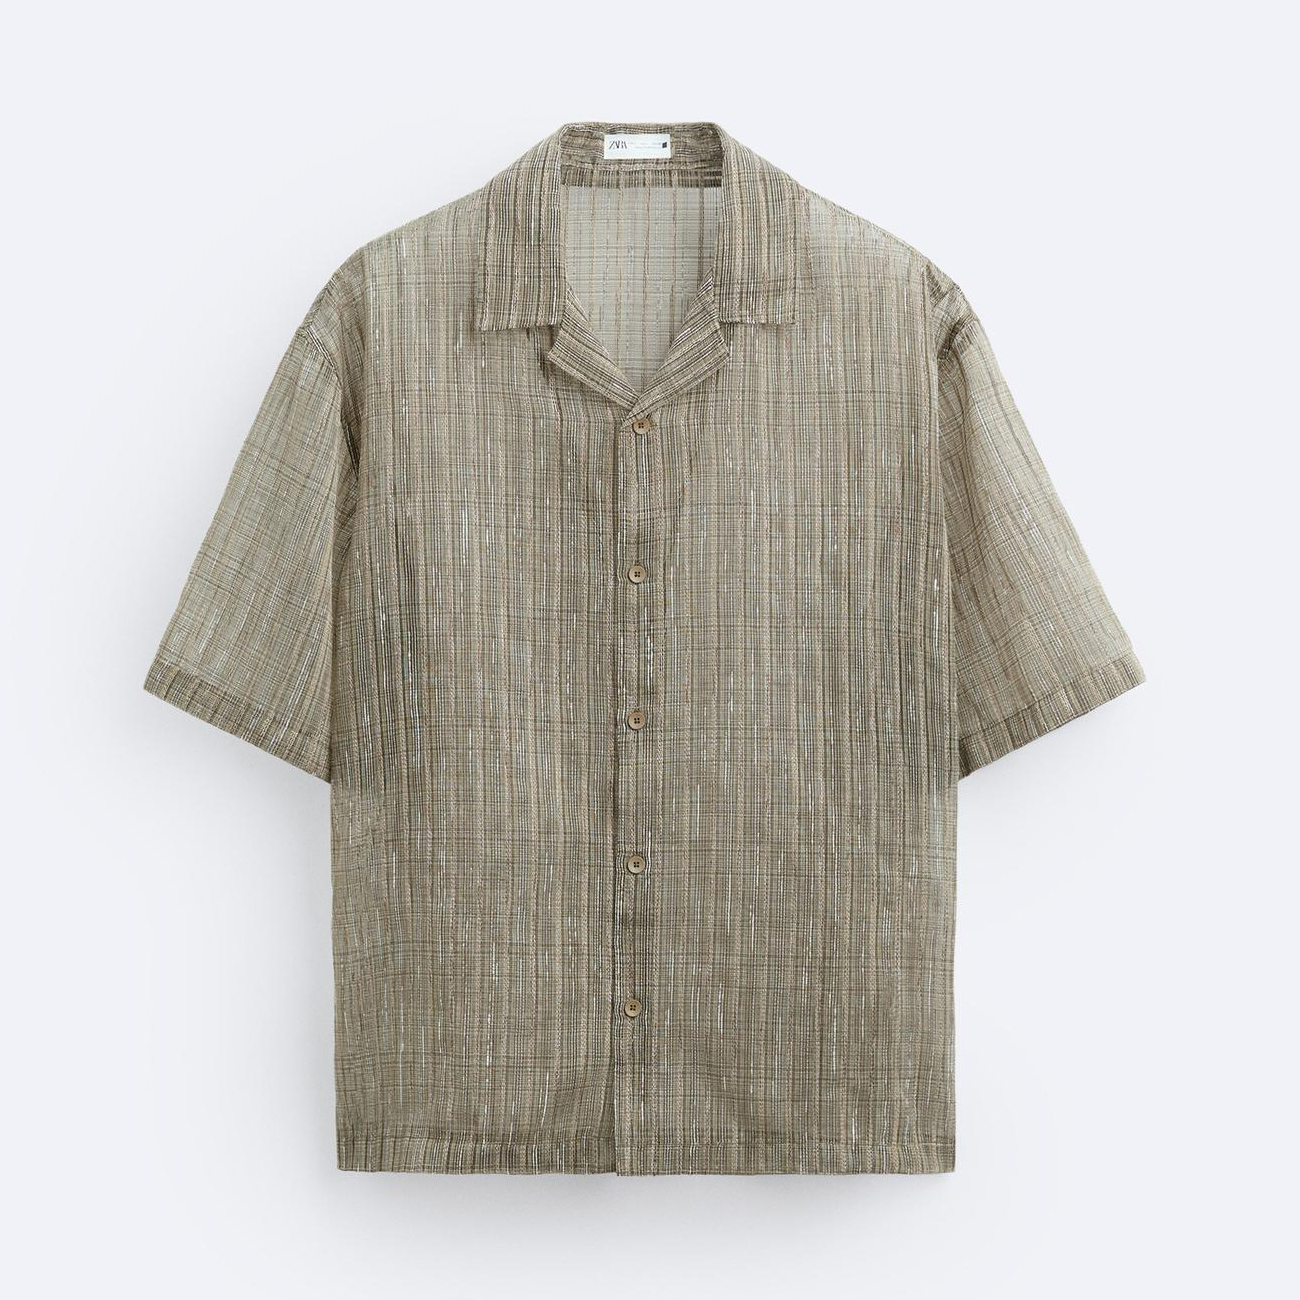 Рубашка Zara Semi-sheer Textured, серо-коричневый рубашка zara semi lace черный